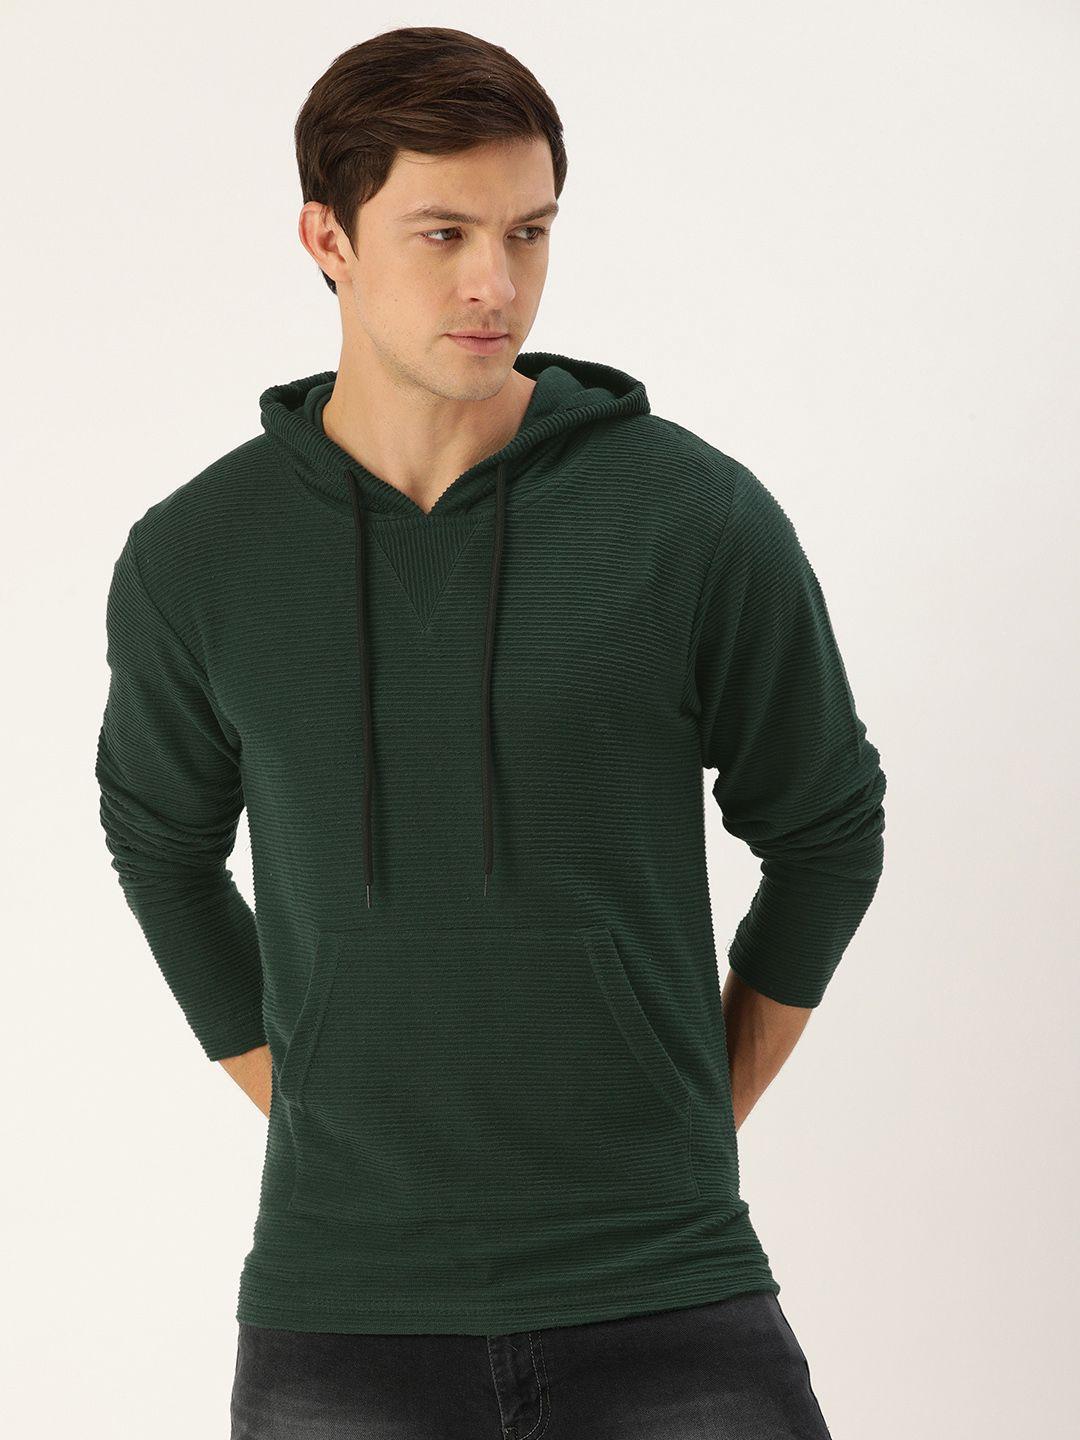 campus-sutra-men-green-ribbed-hooded-sweatshirt